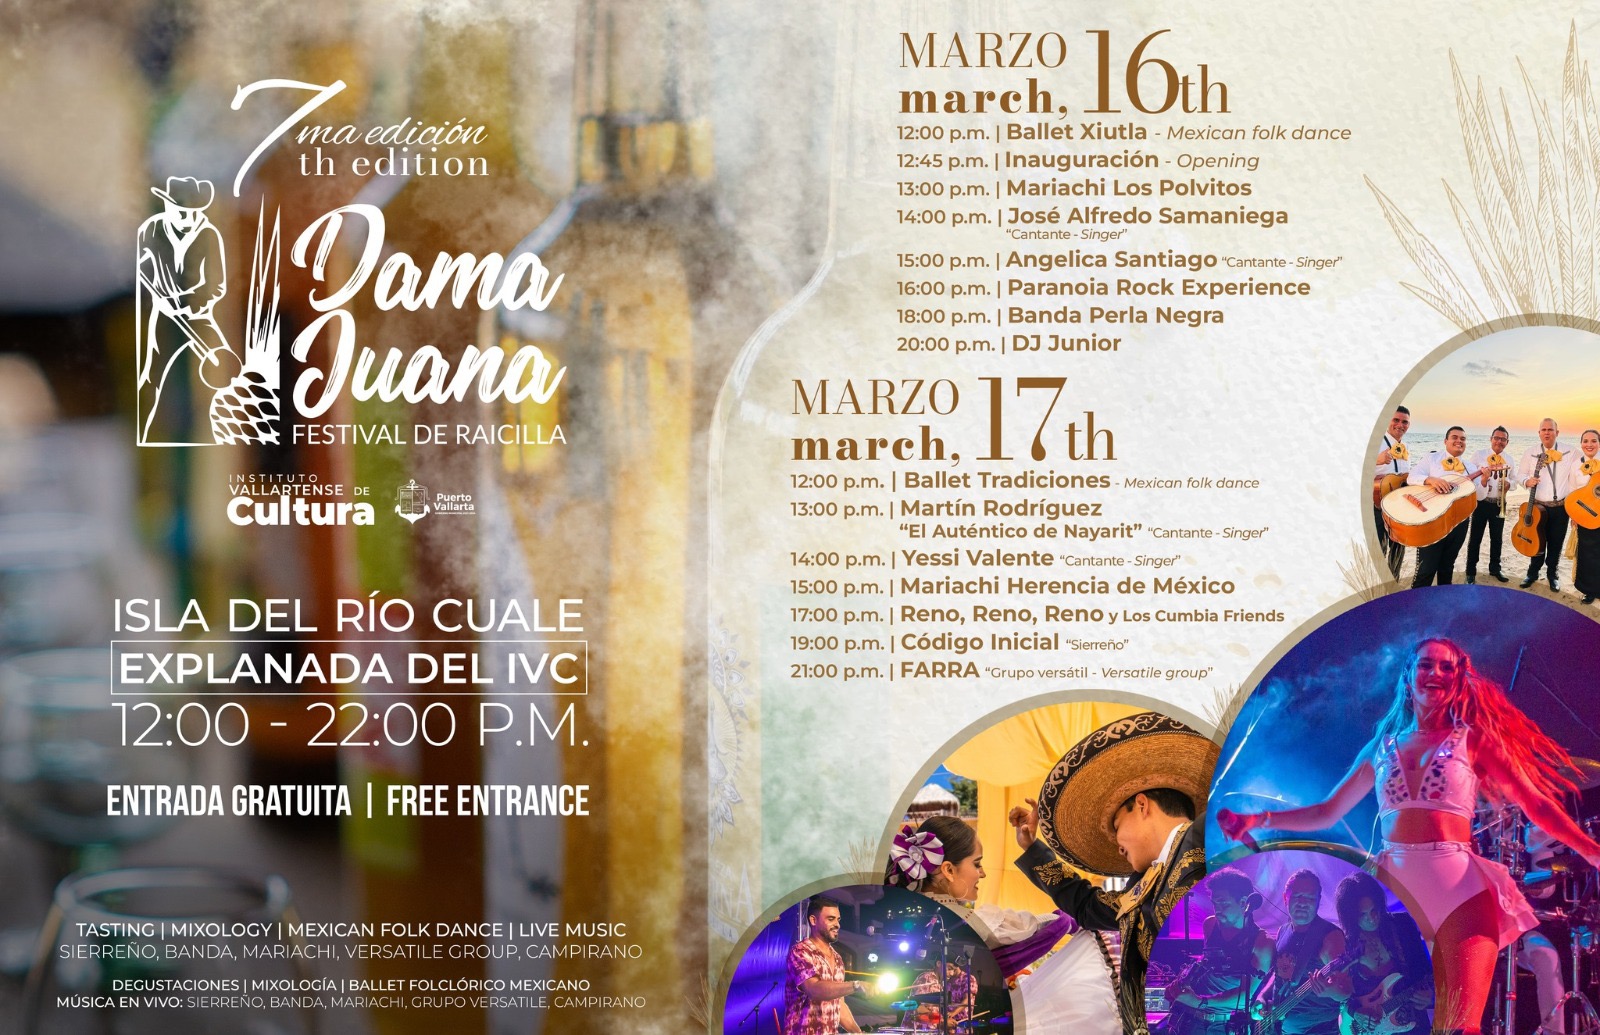 Dama Juana- Raicilla Festival